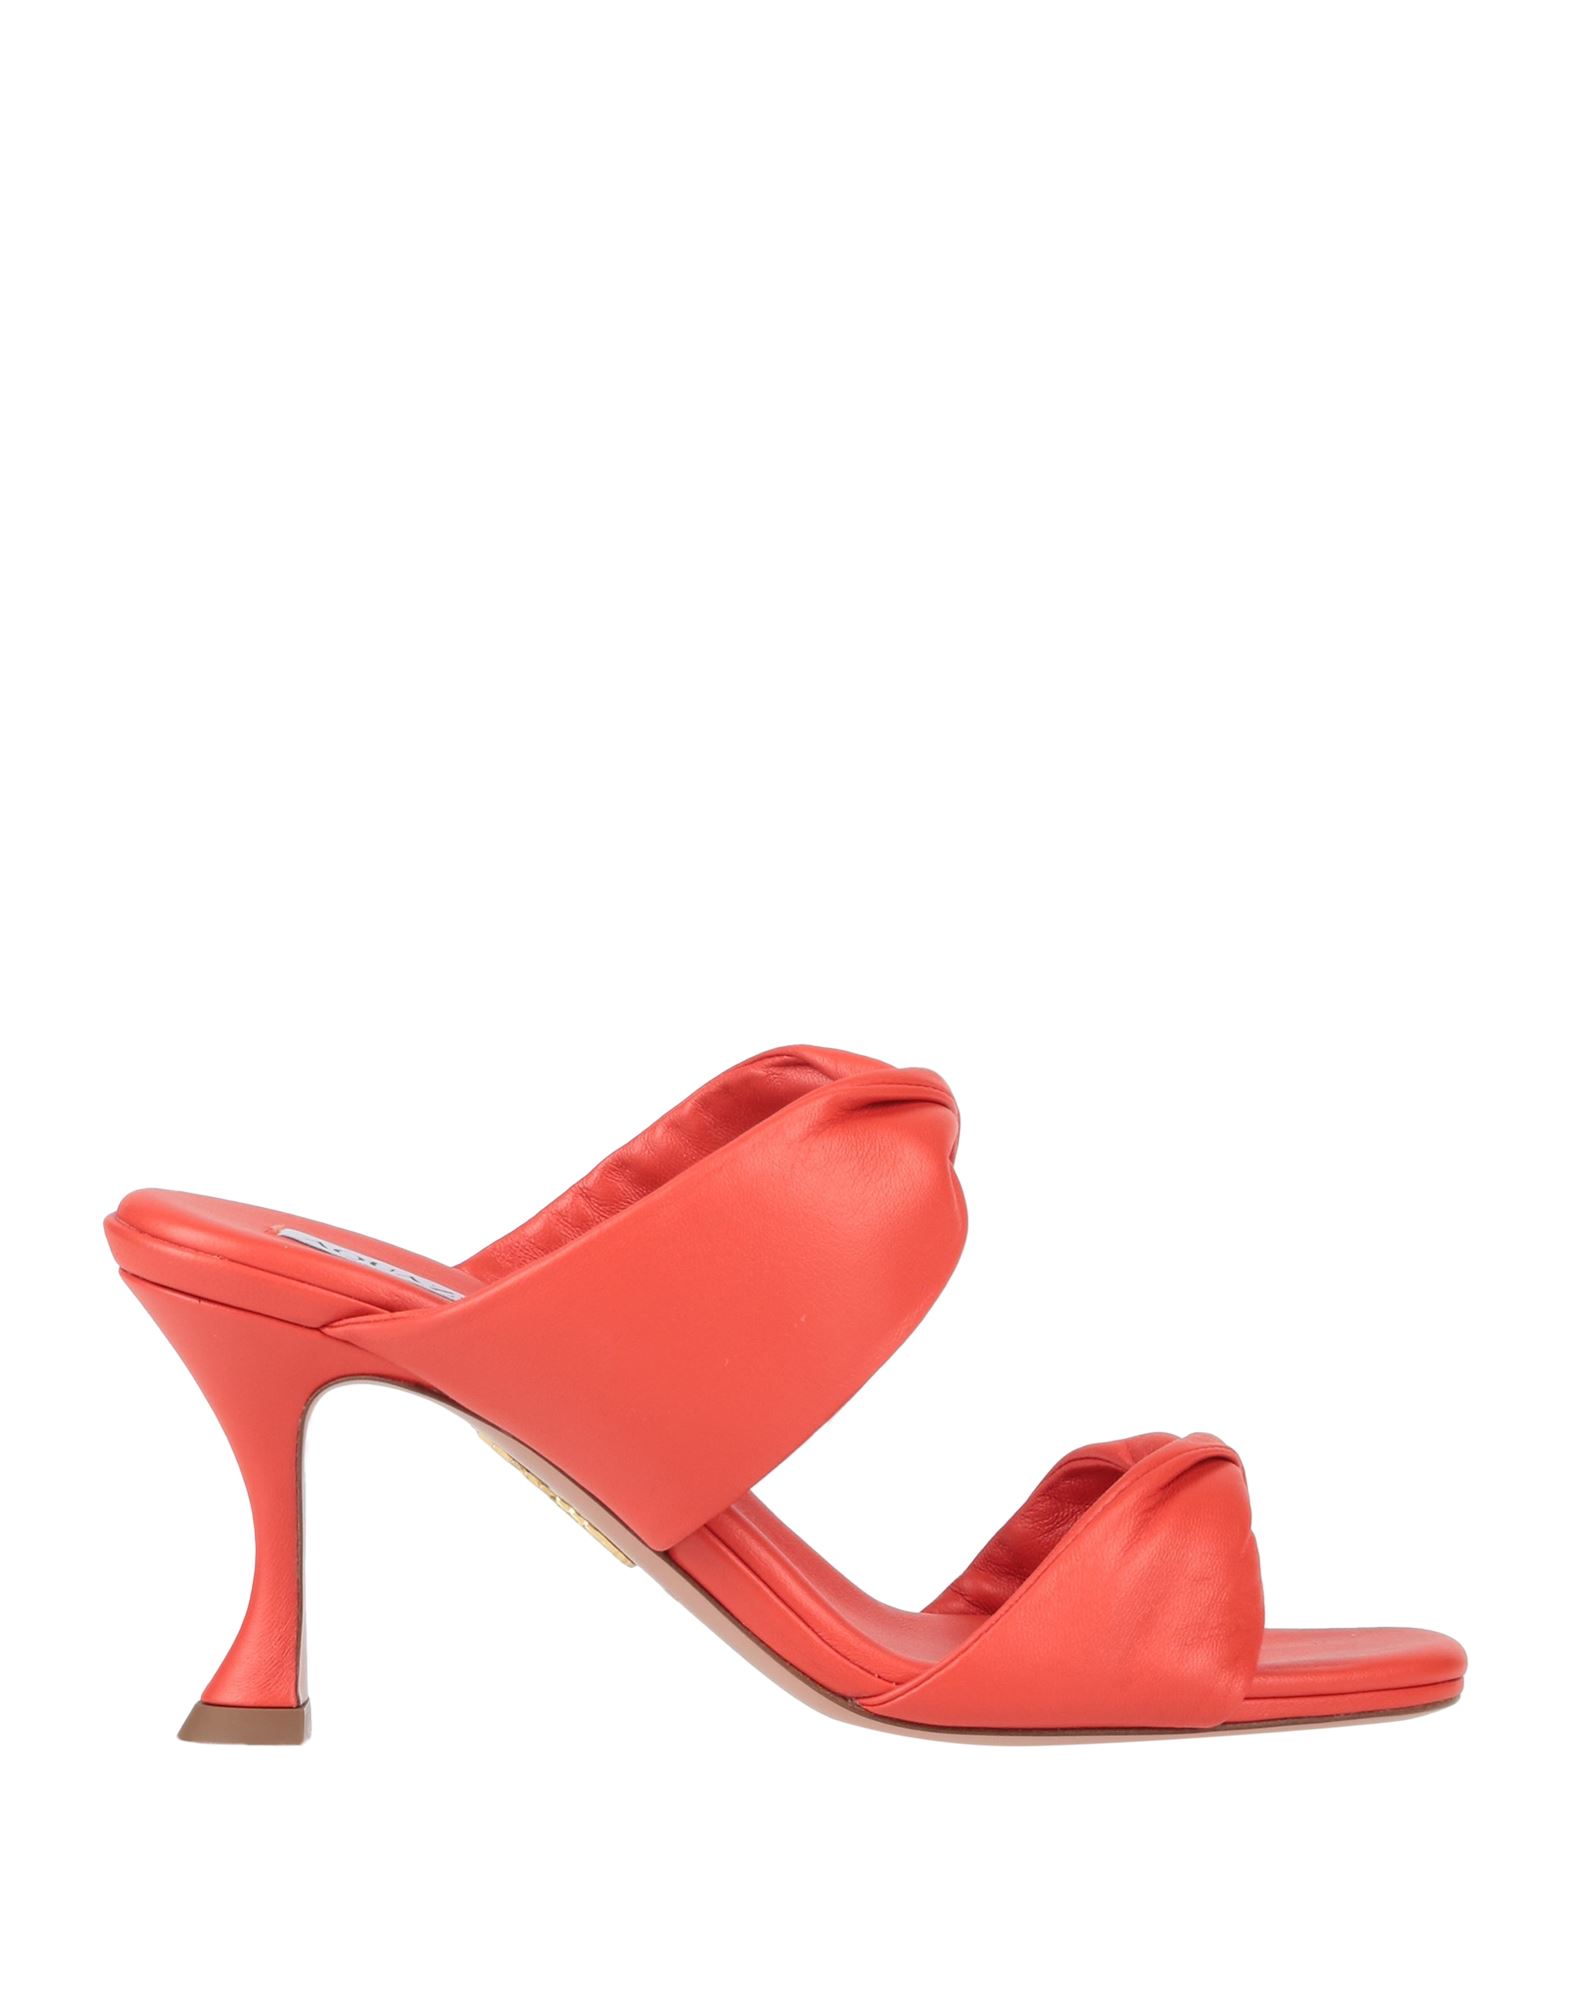 Aquazzura Sandals In Red